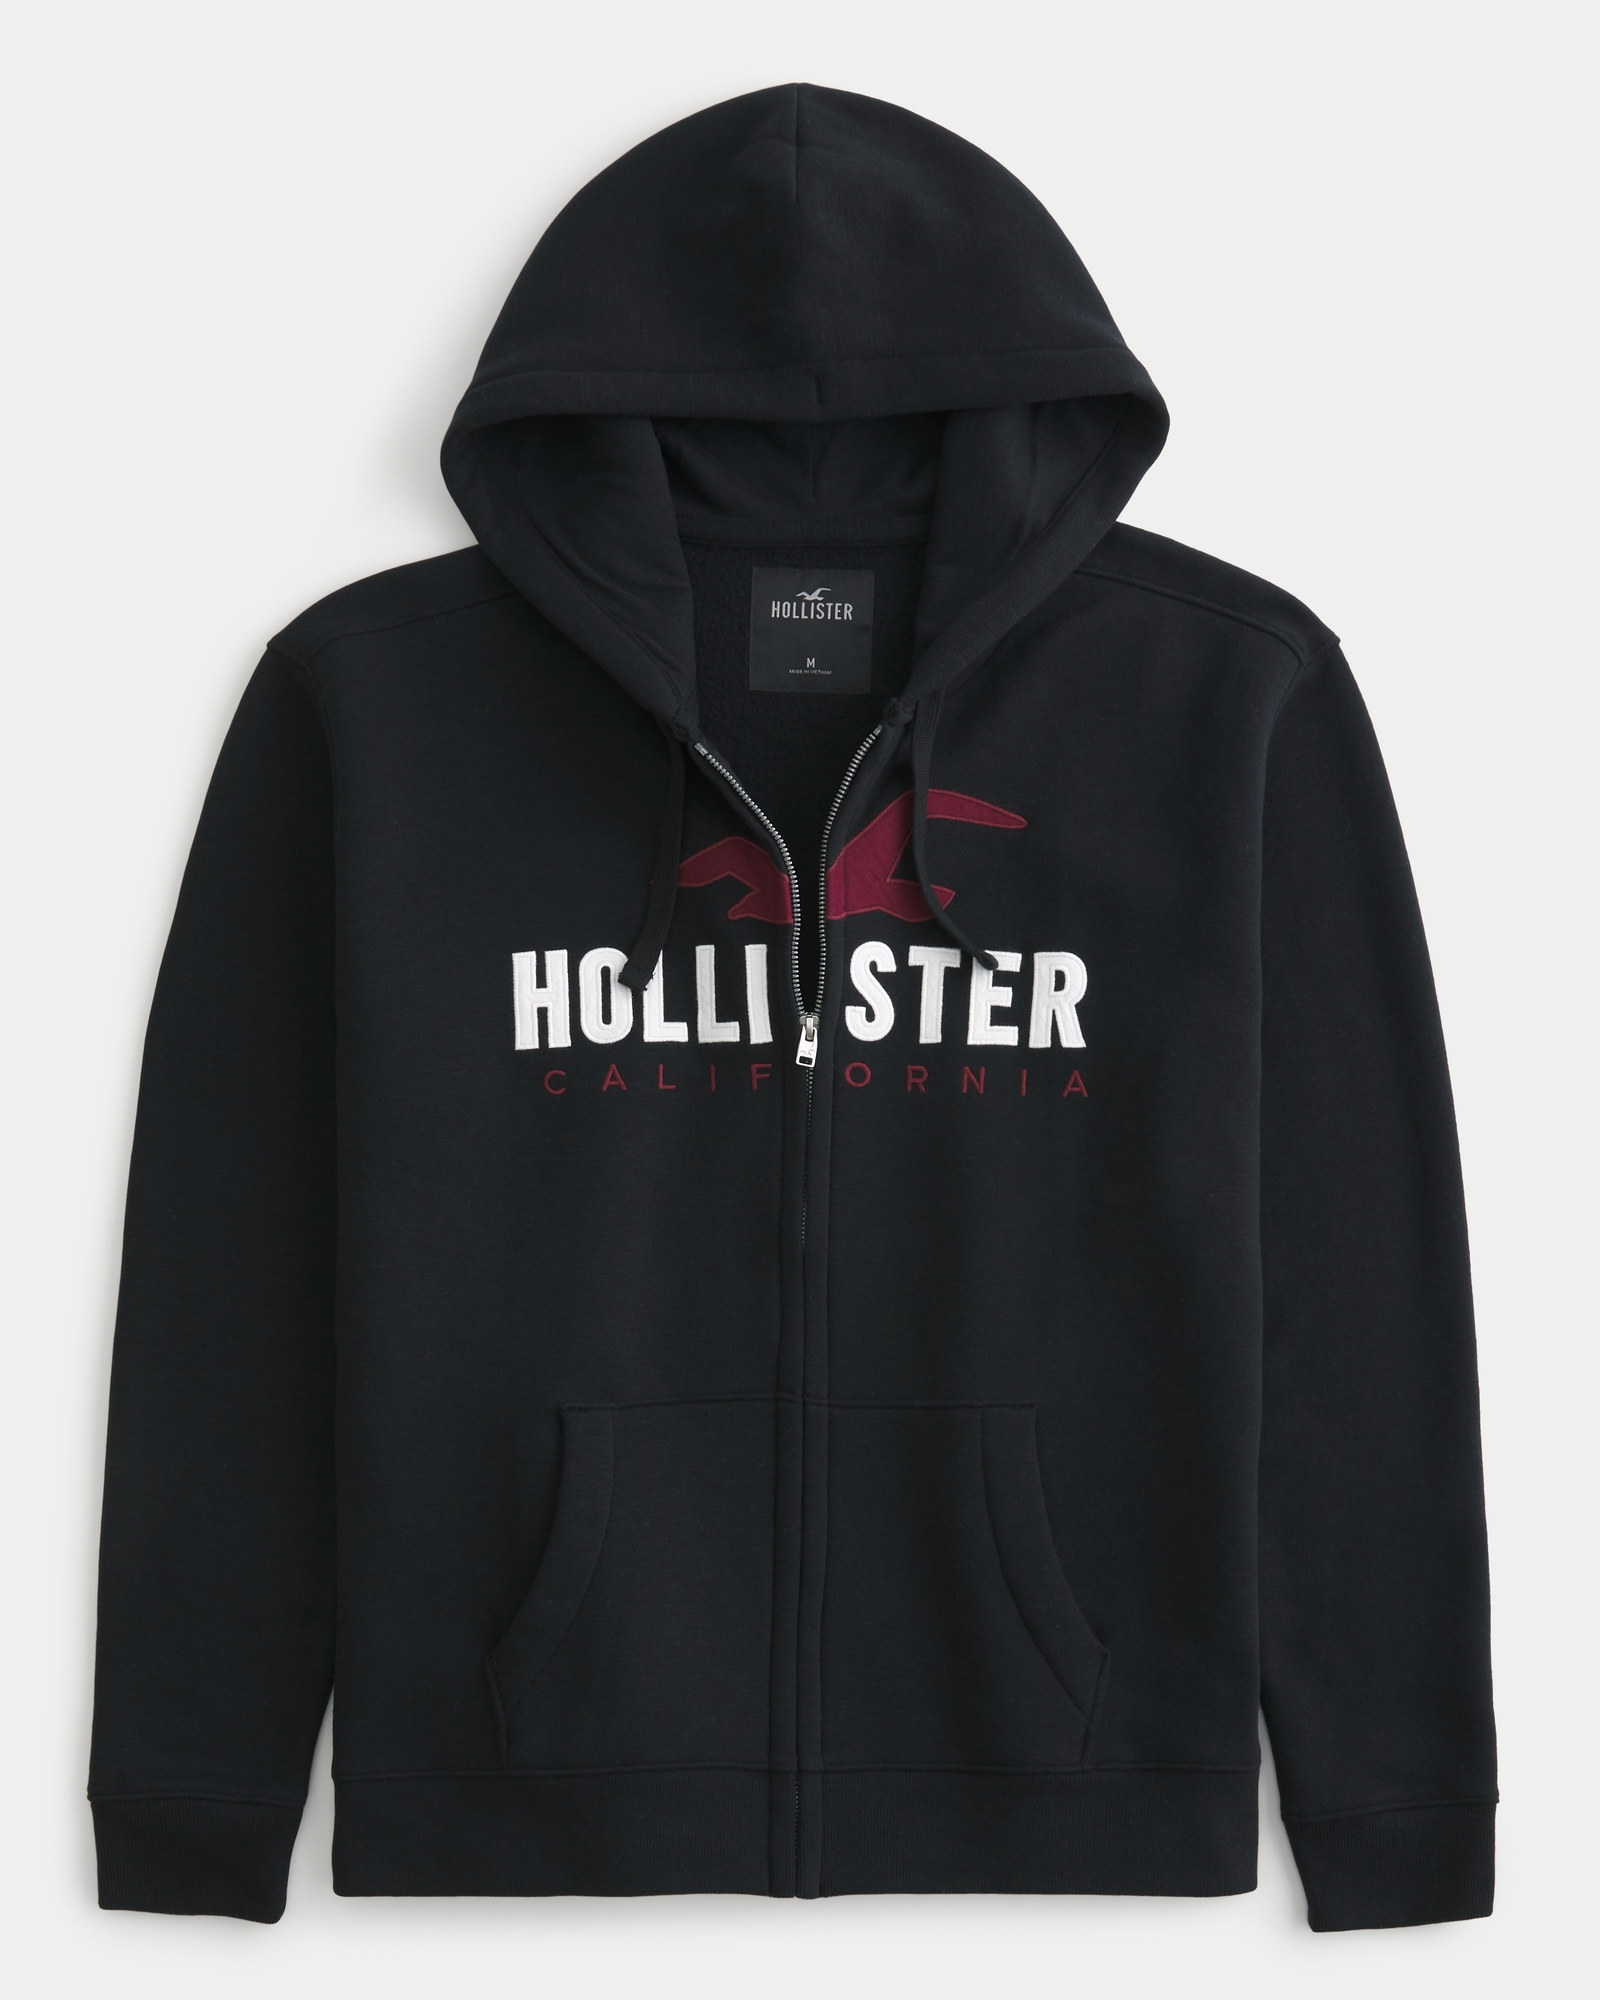 Hollister Hco. Guys Sweatshirts - Hoodies 